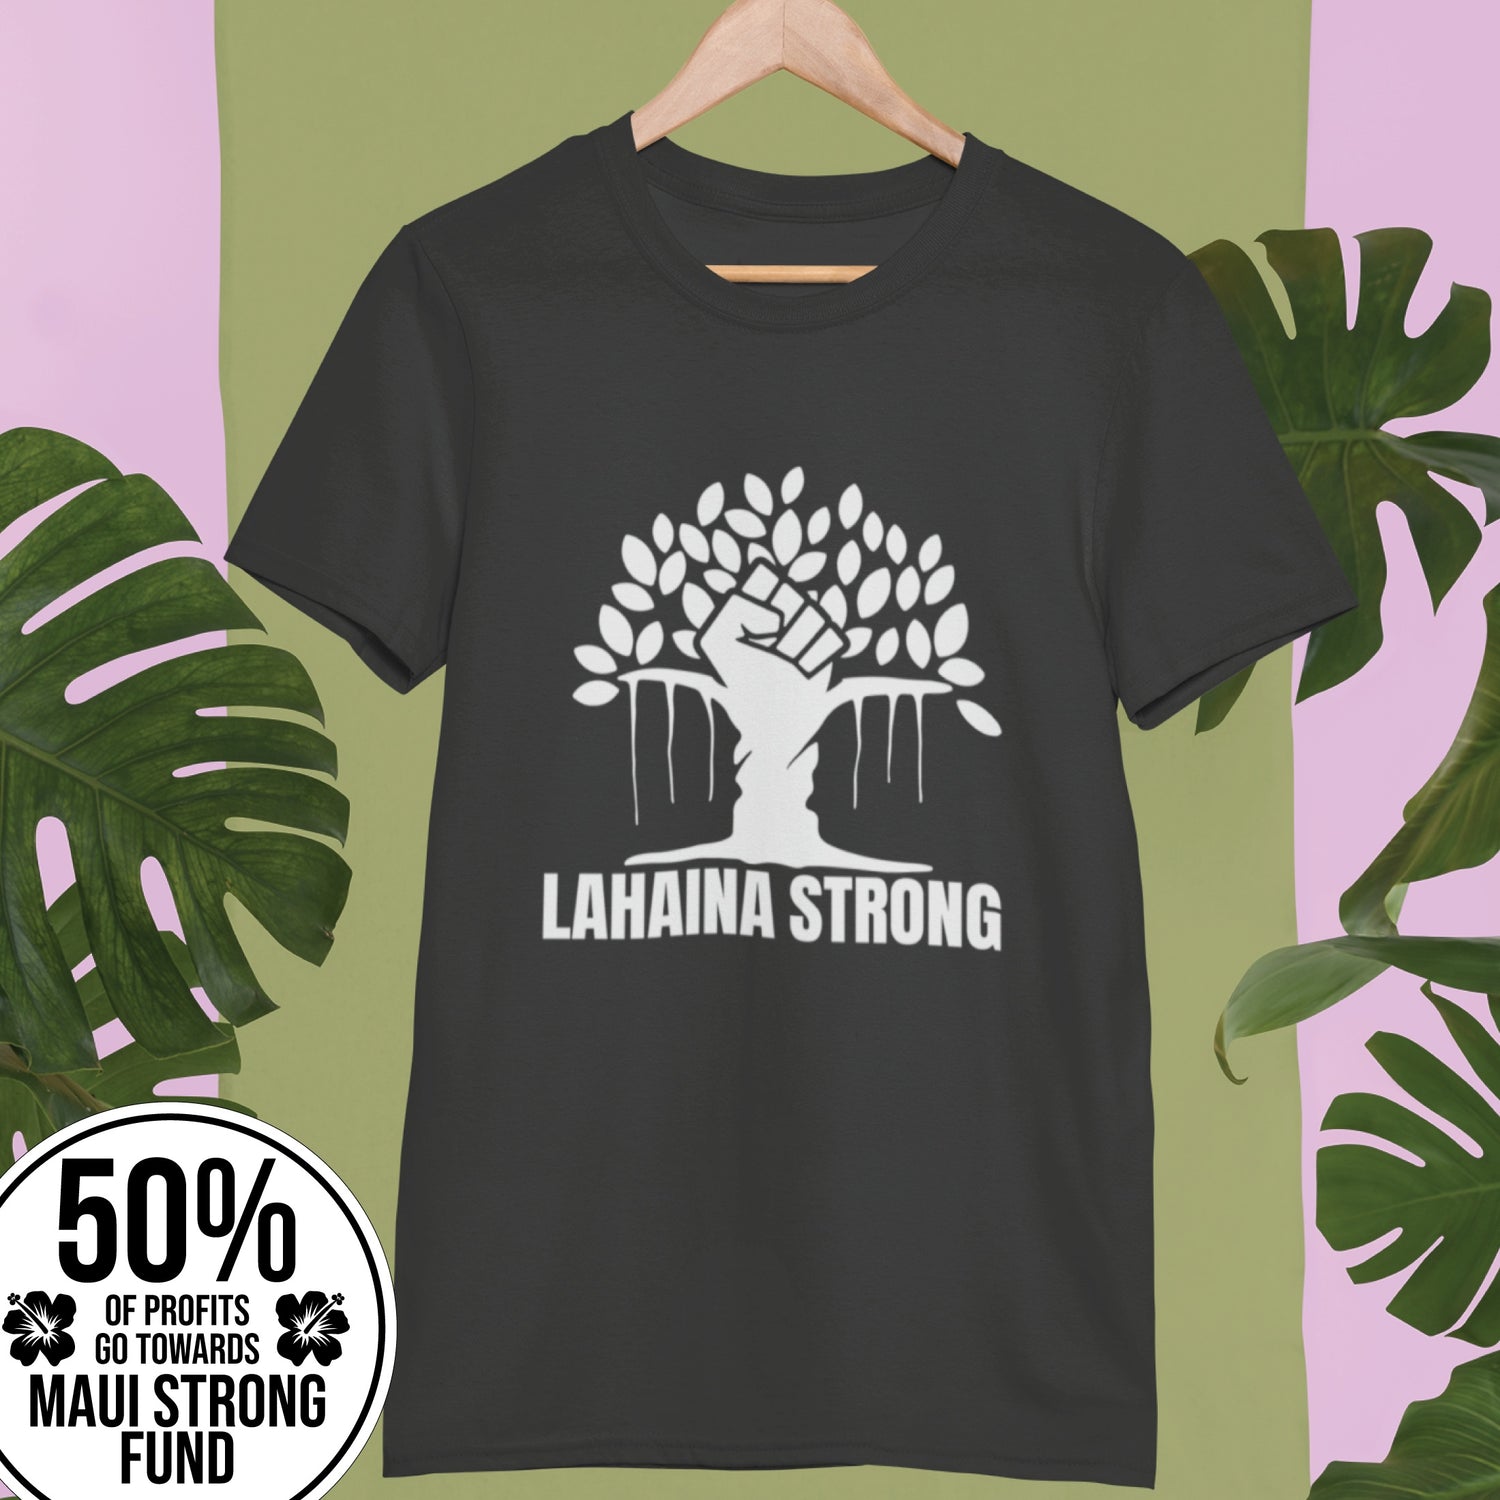 Lahaina and Maui Strong